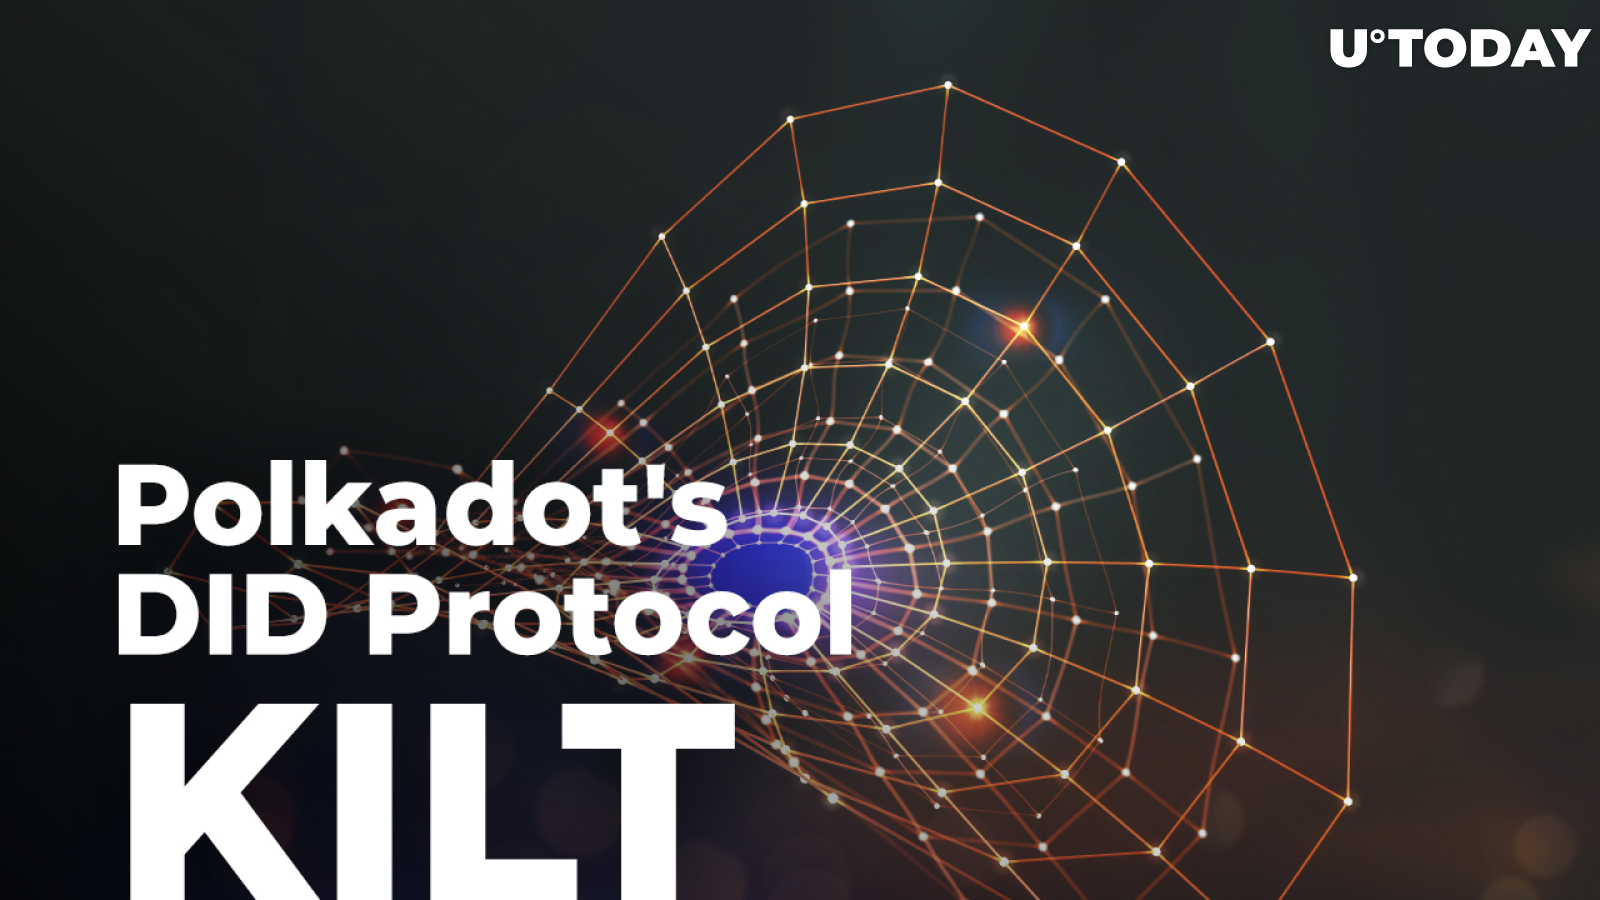 Polkadot's DID Protocol, KILT, Now Fully Decentralized